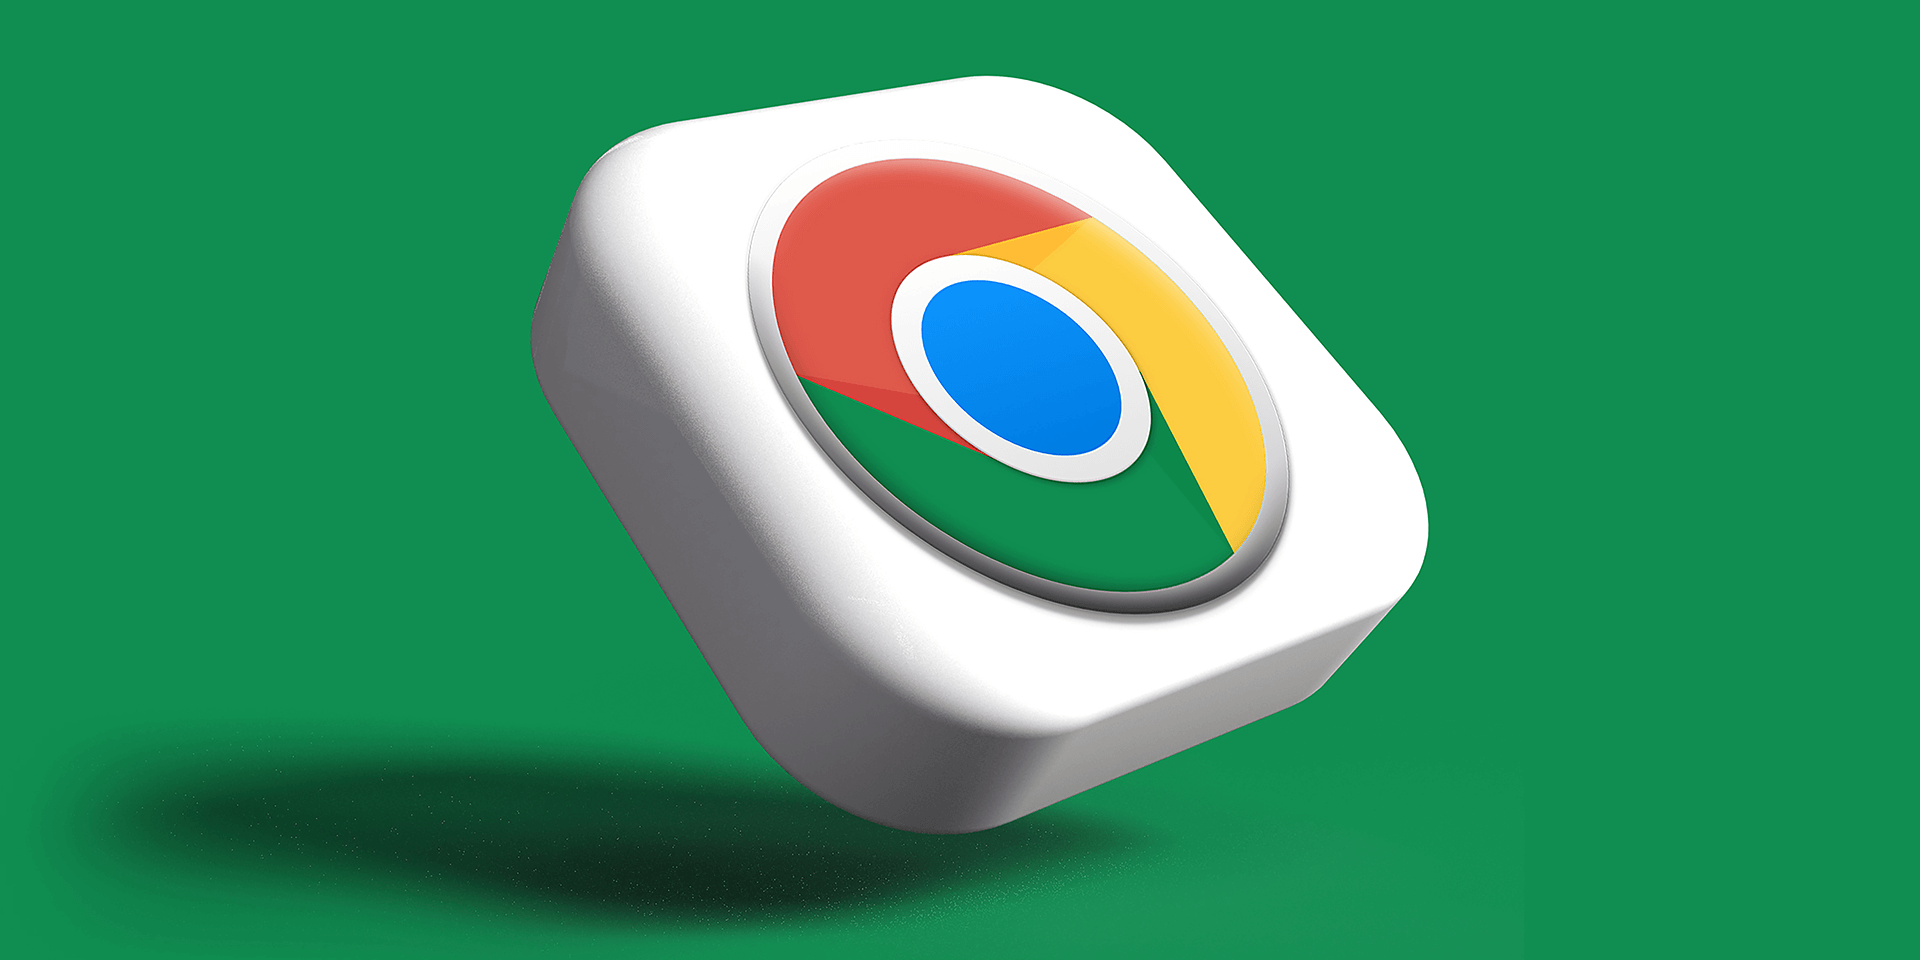 Google Chrome logo on a green background.